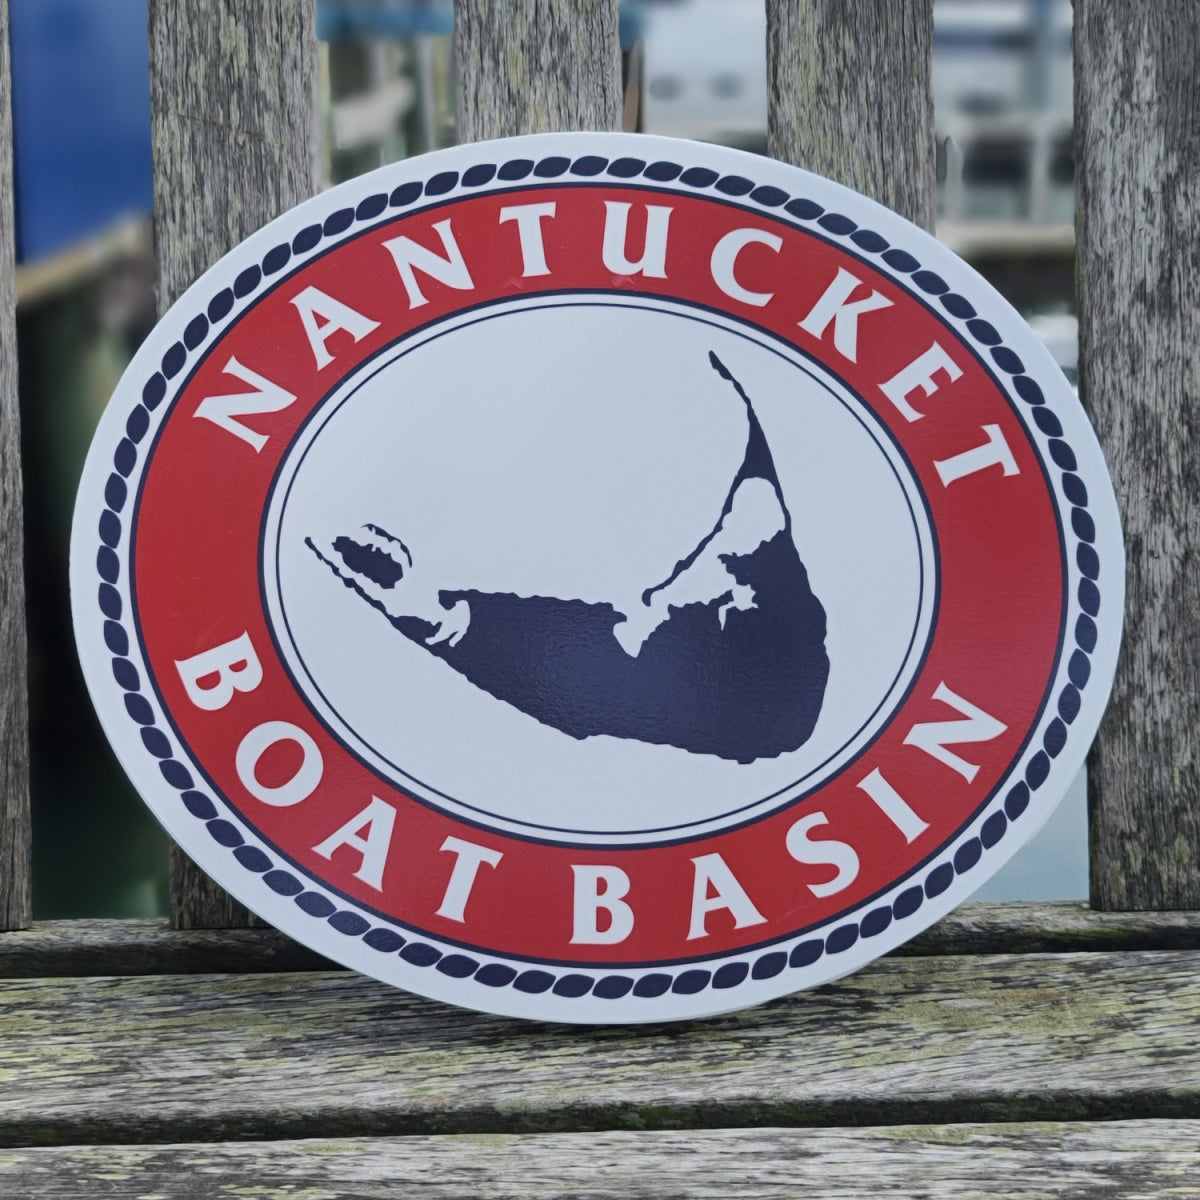 Nantucket Boat Basin Acrylic Oval Sign